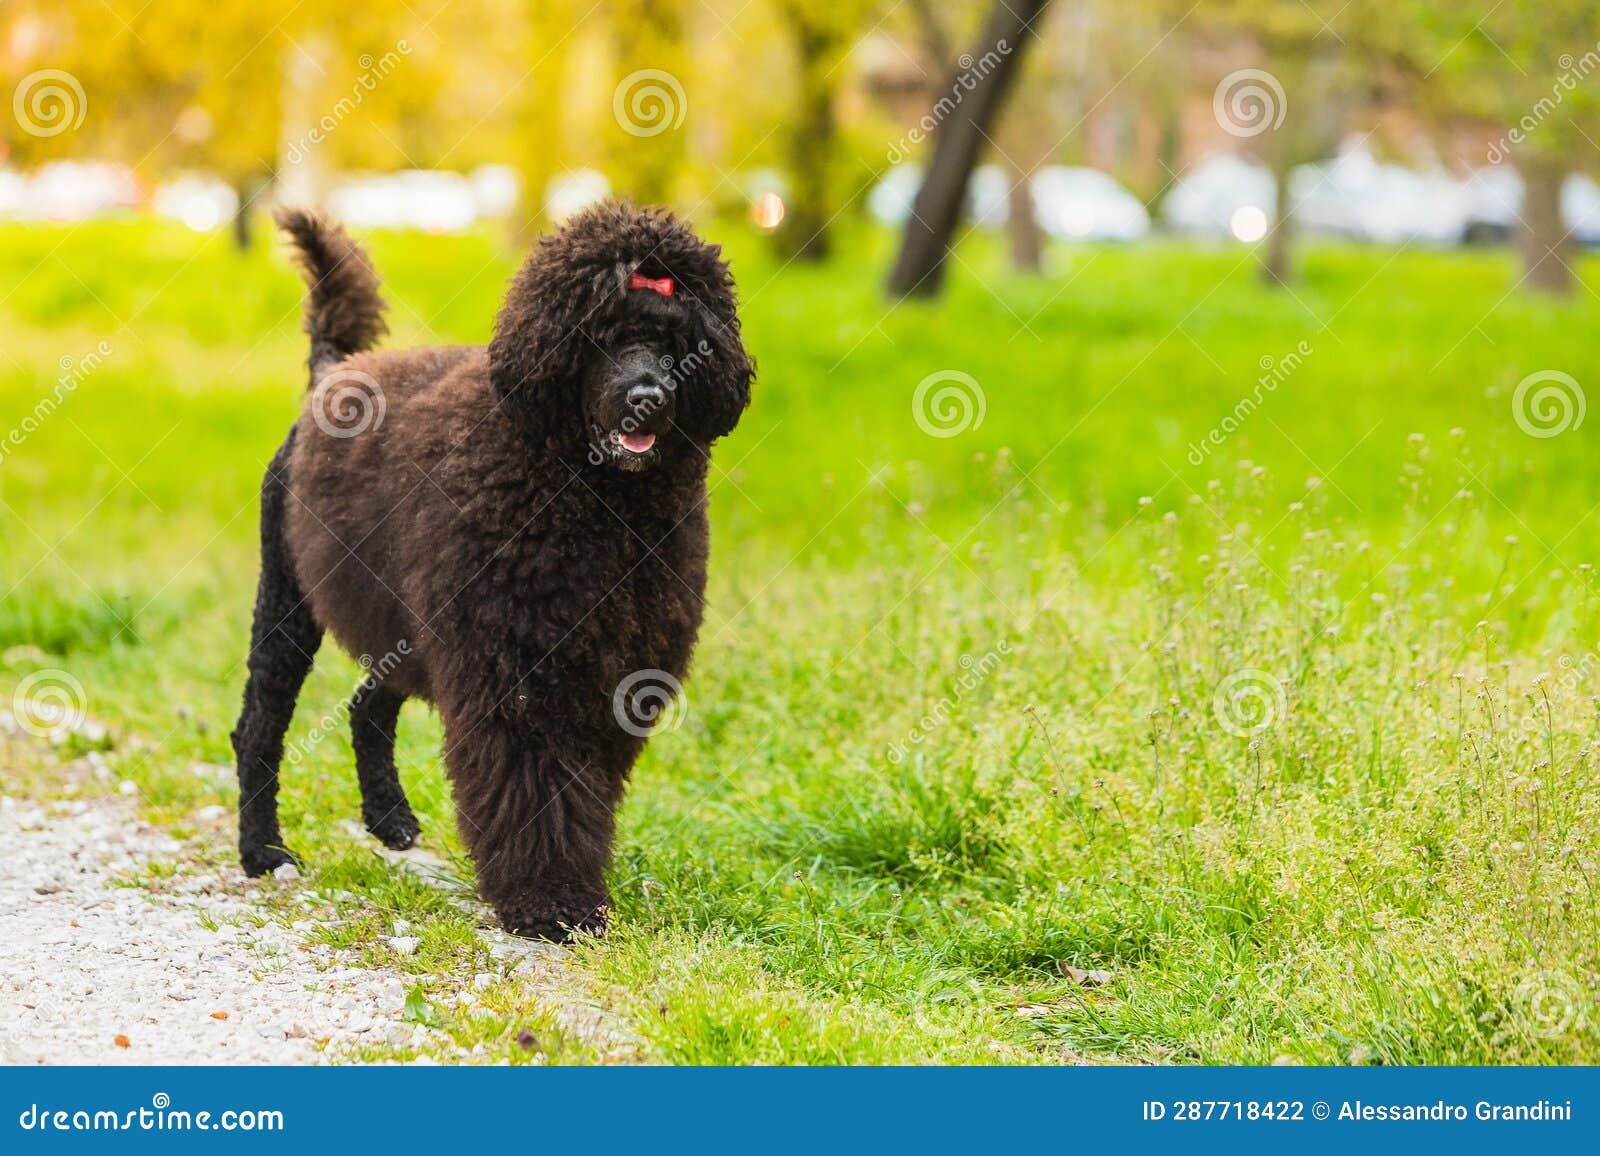 portrait of cÃÂ£o de ÃÂ¡gua portuguÃÂªs, black curly-coated dog outdoors